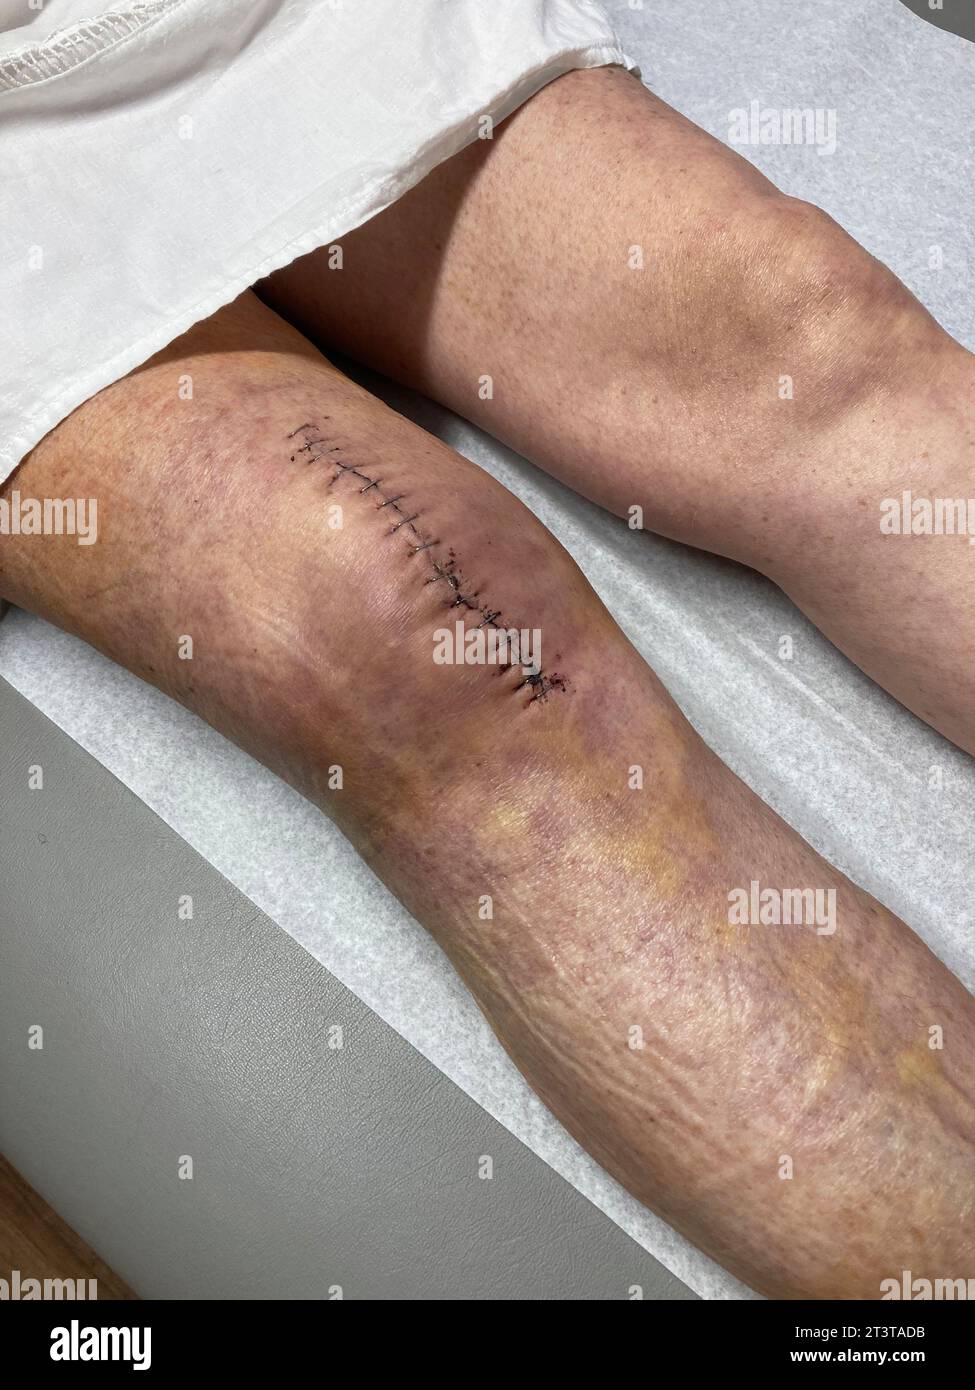 Frau mit grosser Narbe am Knie nach Operation Stockfoto